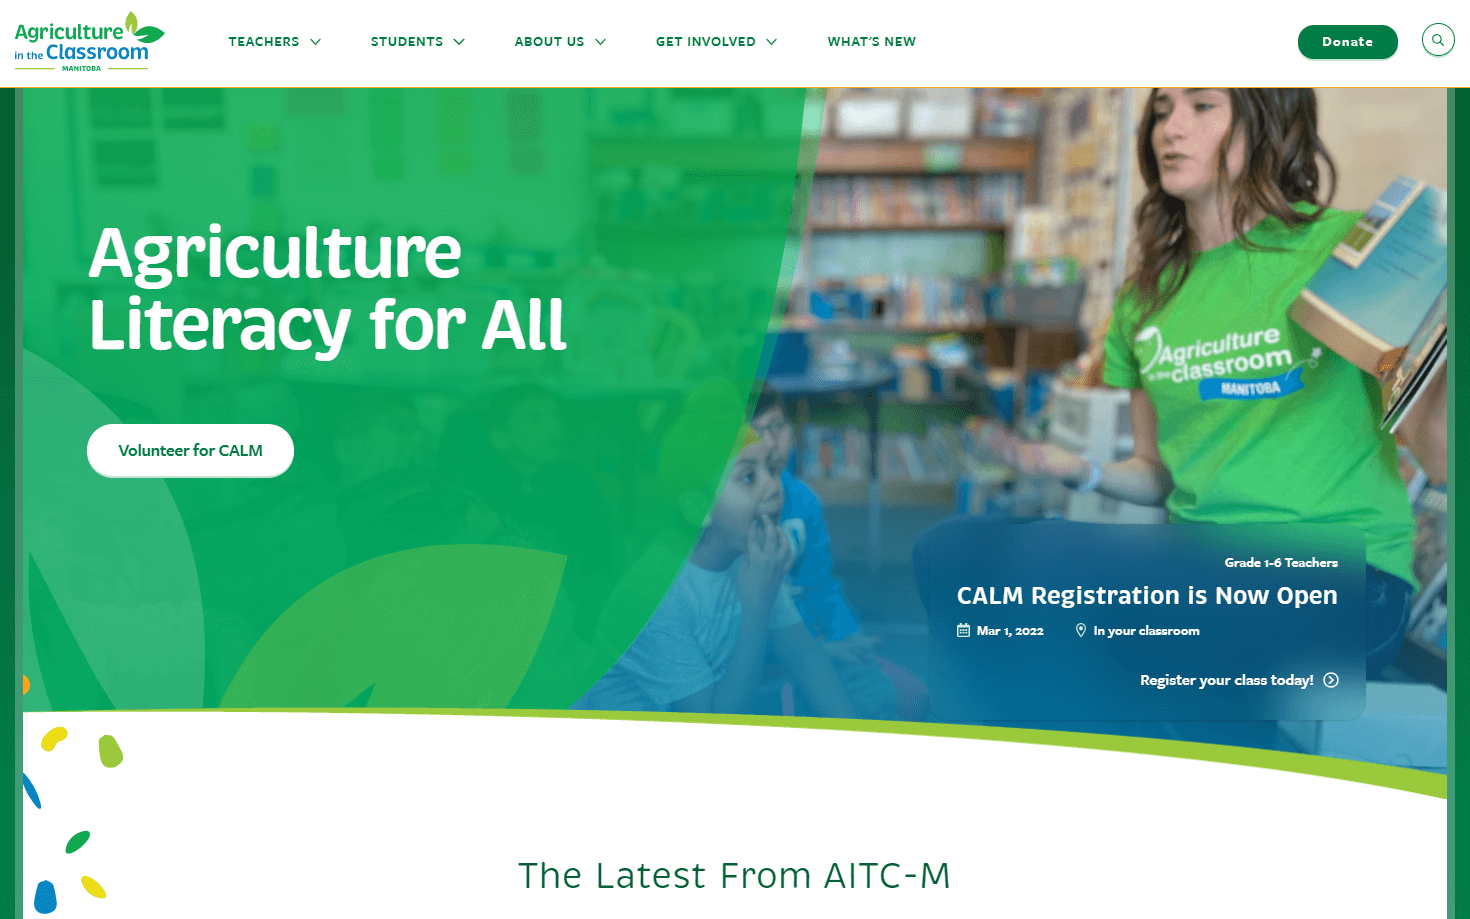 AITC Manitoba Non-profit organization's website landing page